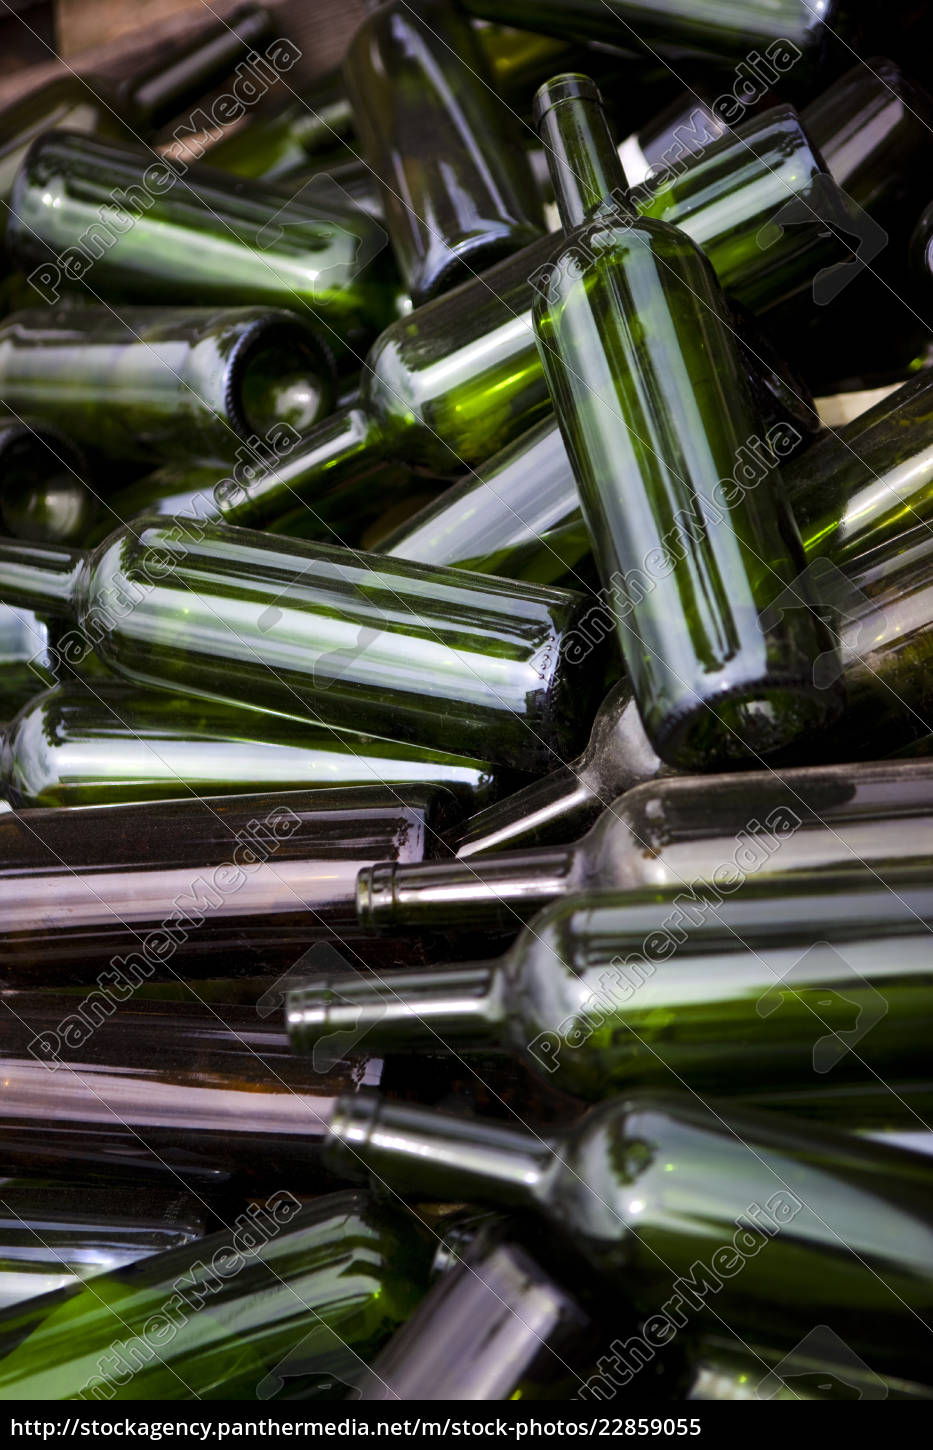 Tomme vinflasker - Stockphoto | PantherMedia